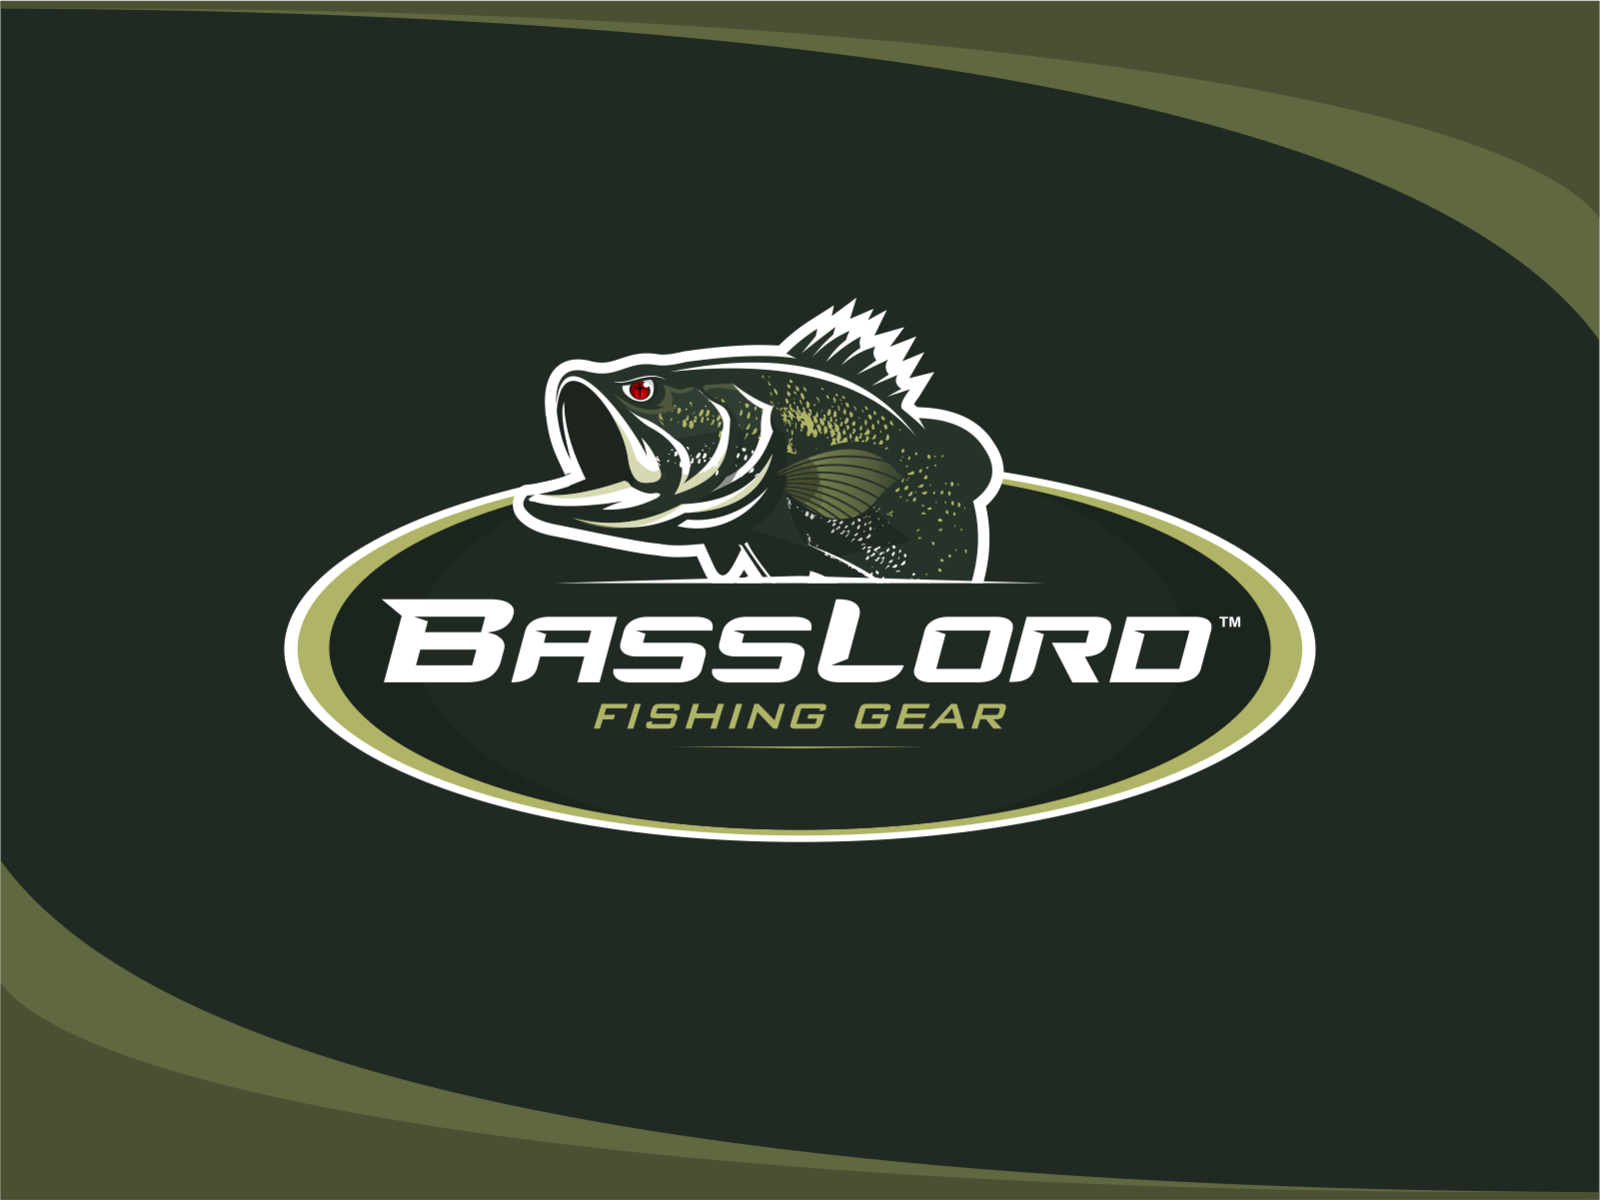 BassLord Bassfishing Logo by Shadowcaster on Dribbble